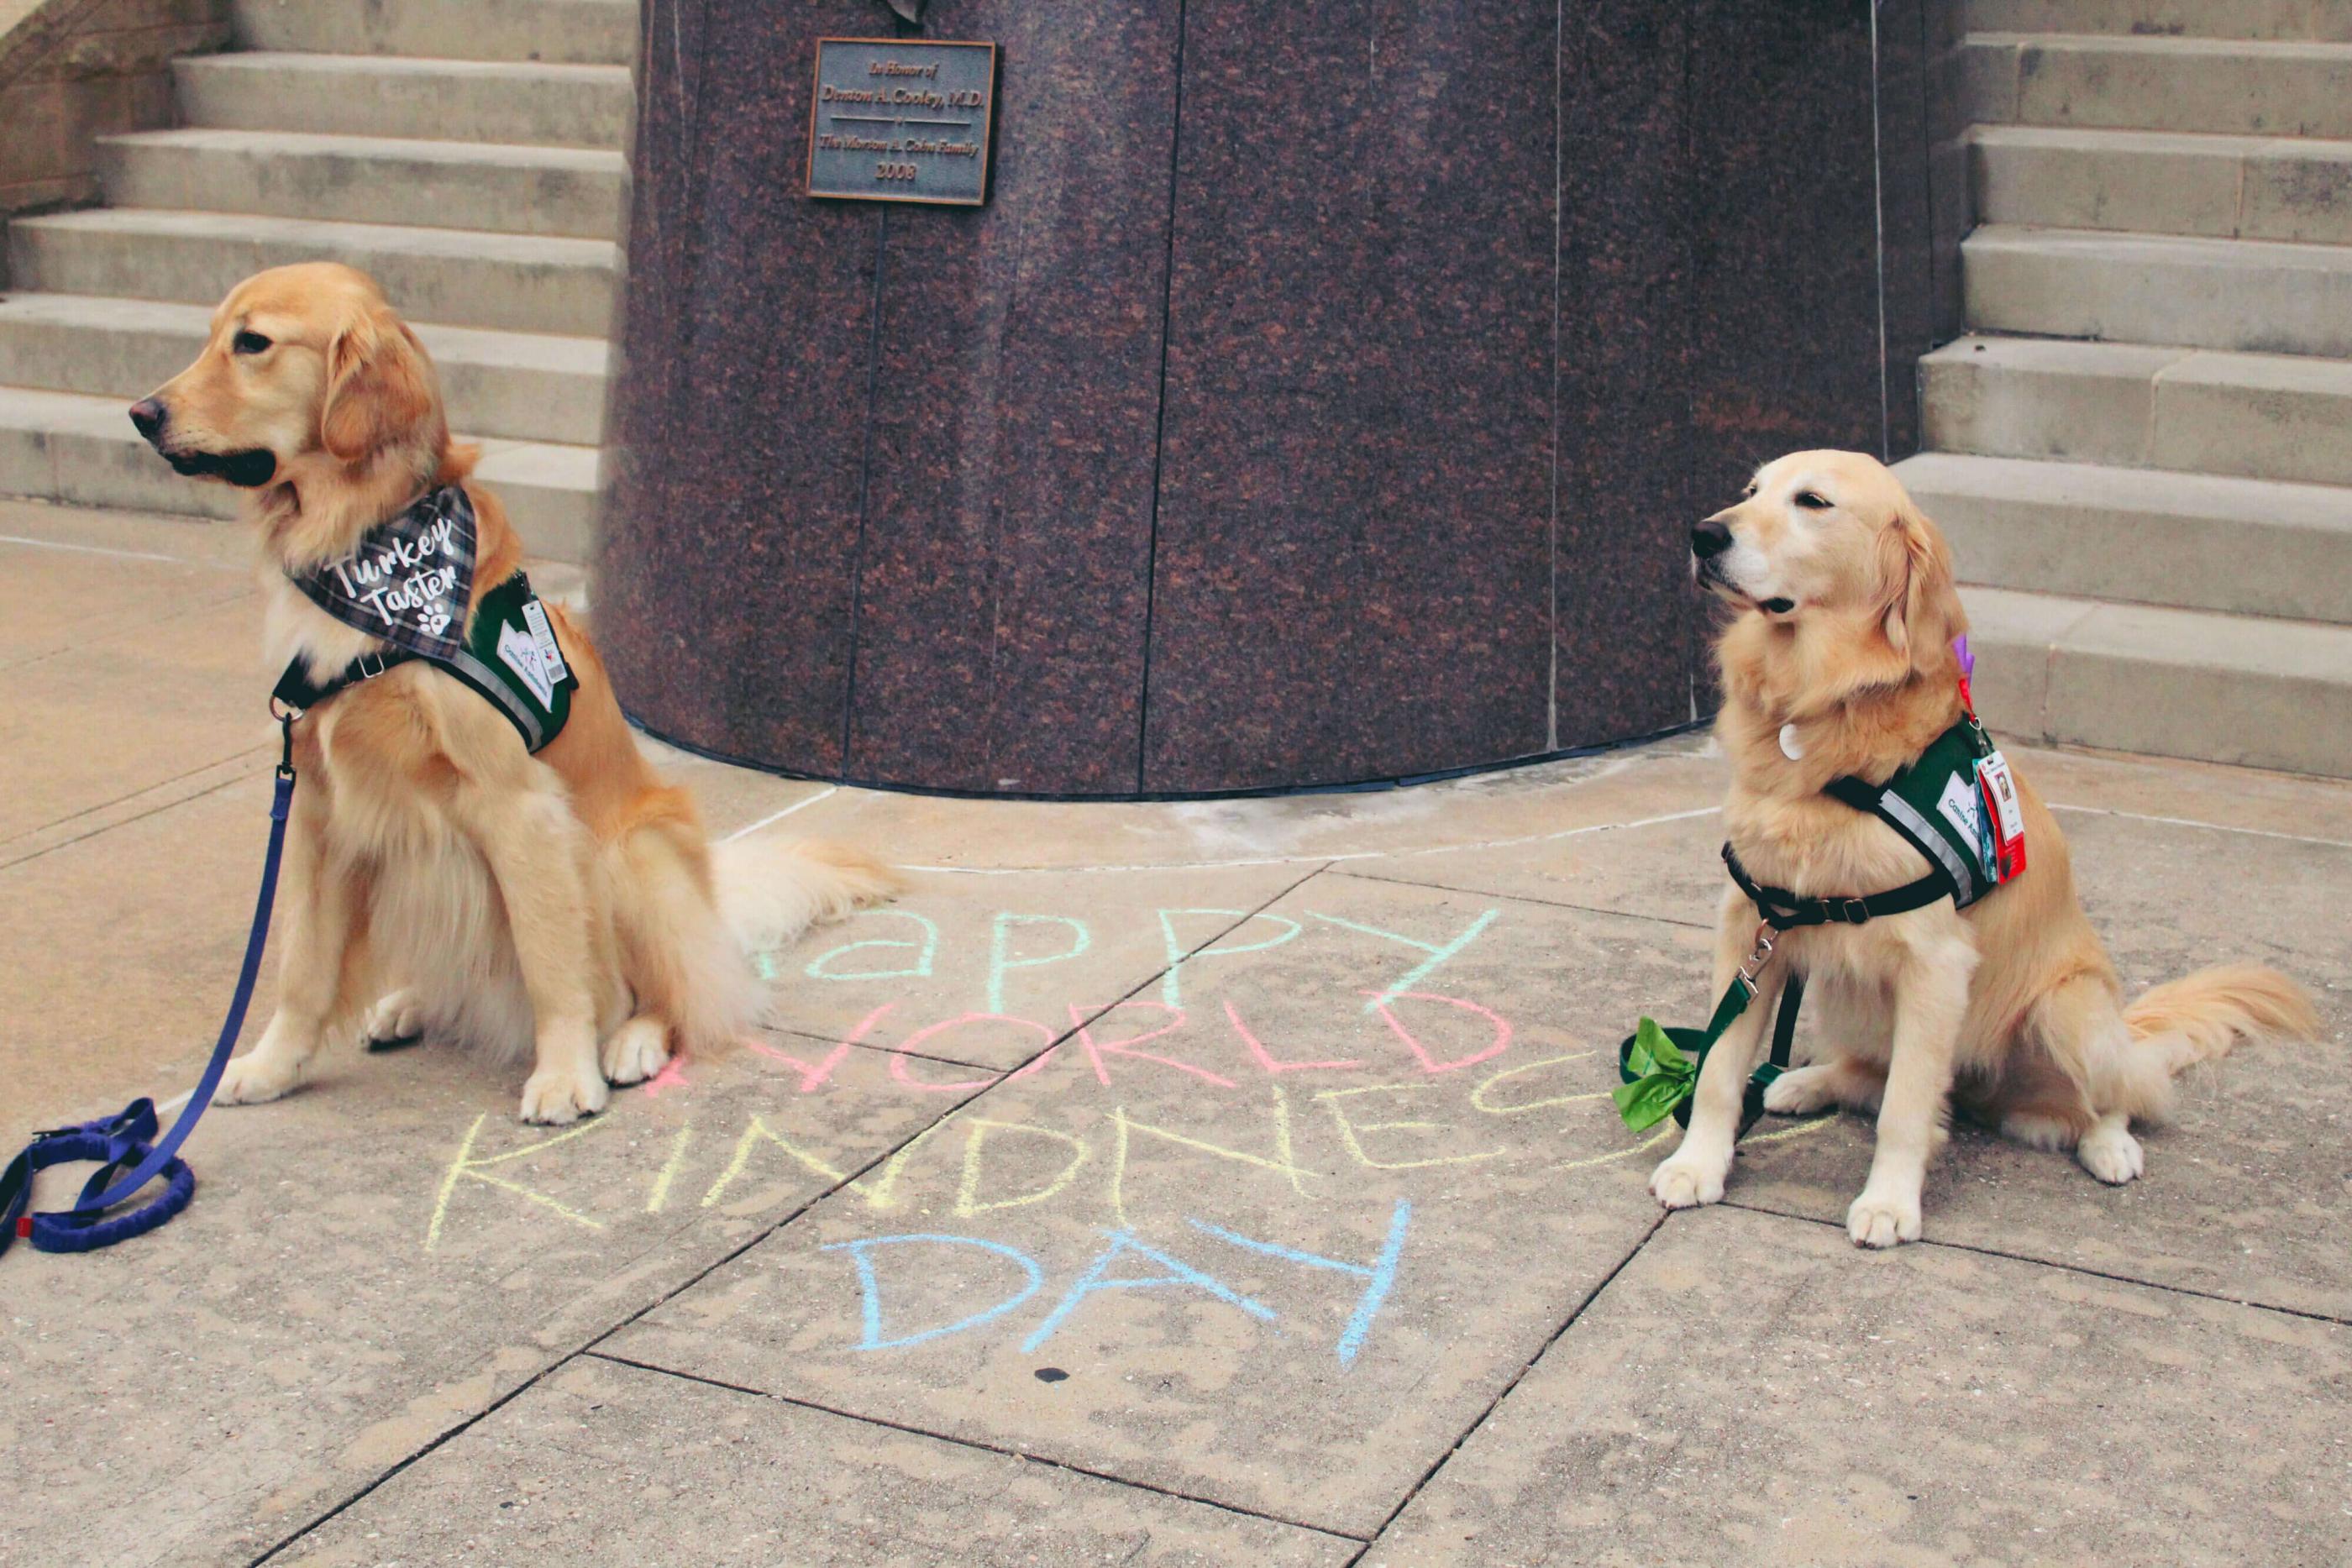 Two golden retrievers sit beside pavement chalk artwork reading "Happy World Kindness Day"